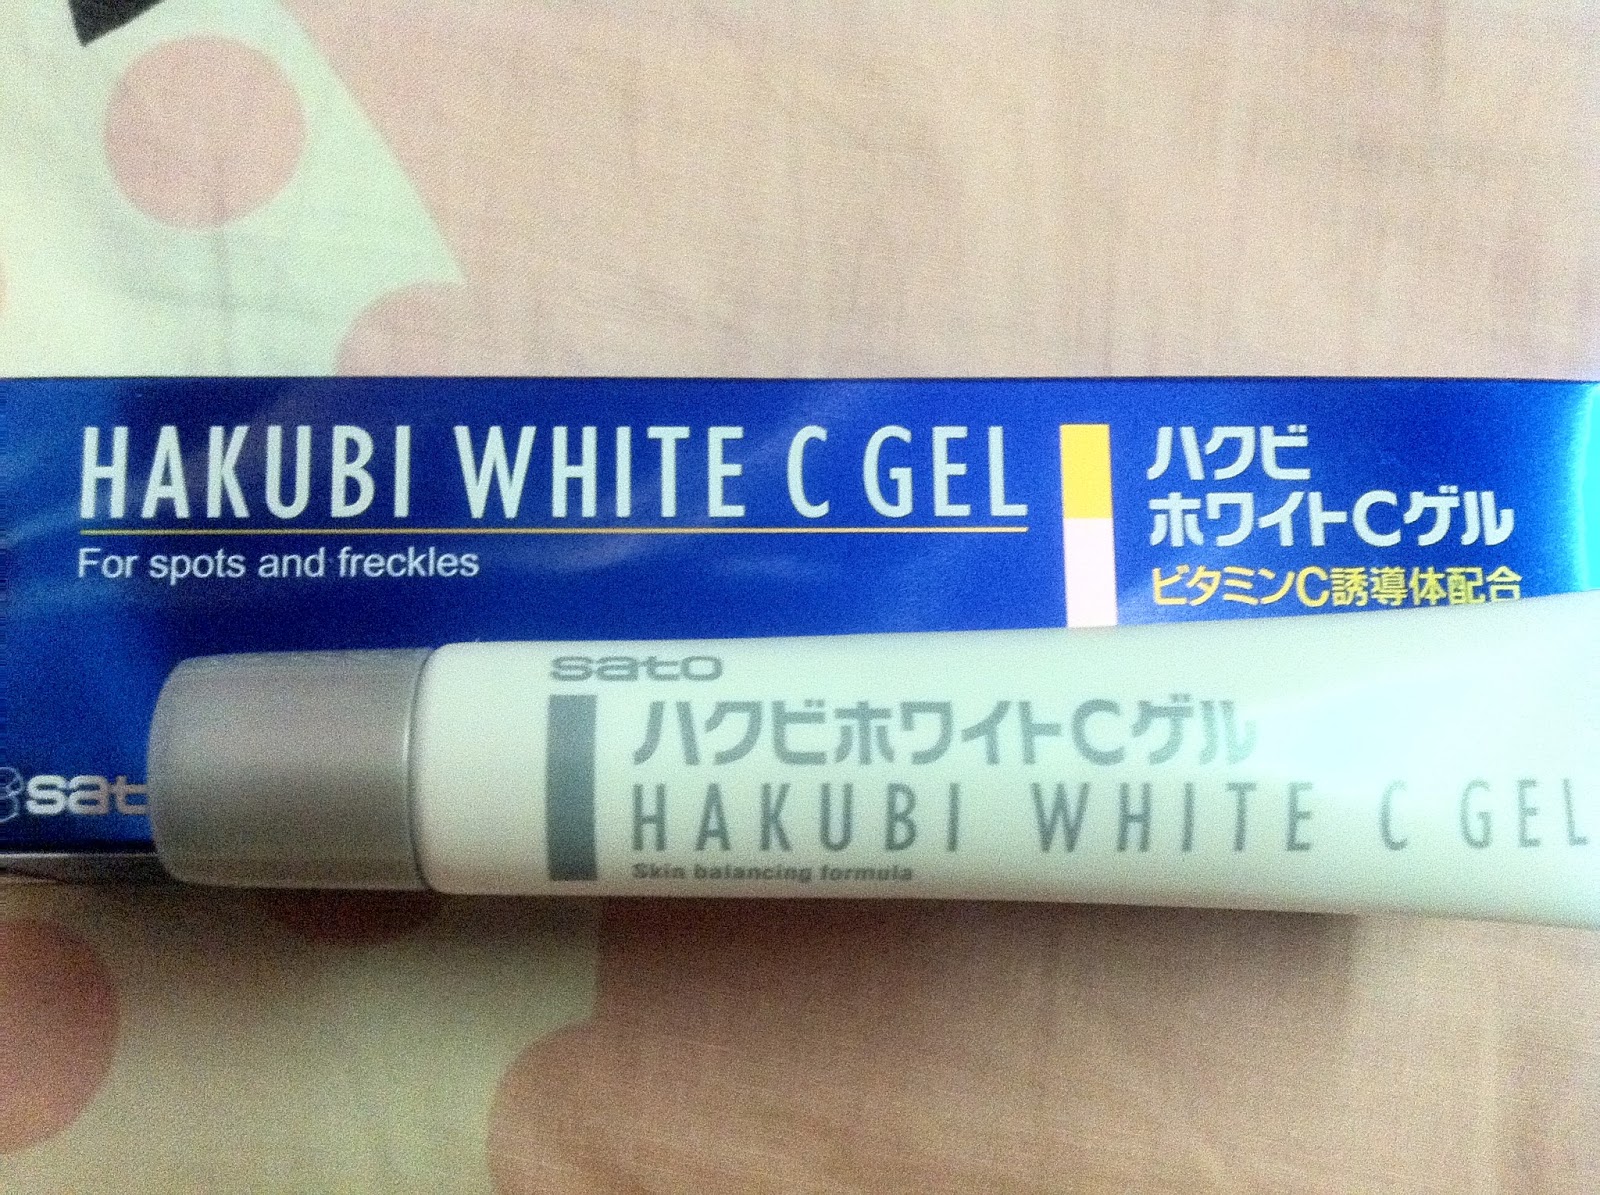 EVERGREEN LOVE: Hakubi White C Gel Review